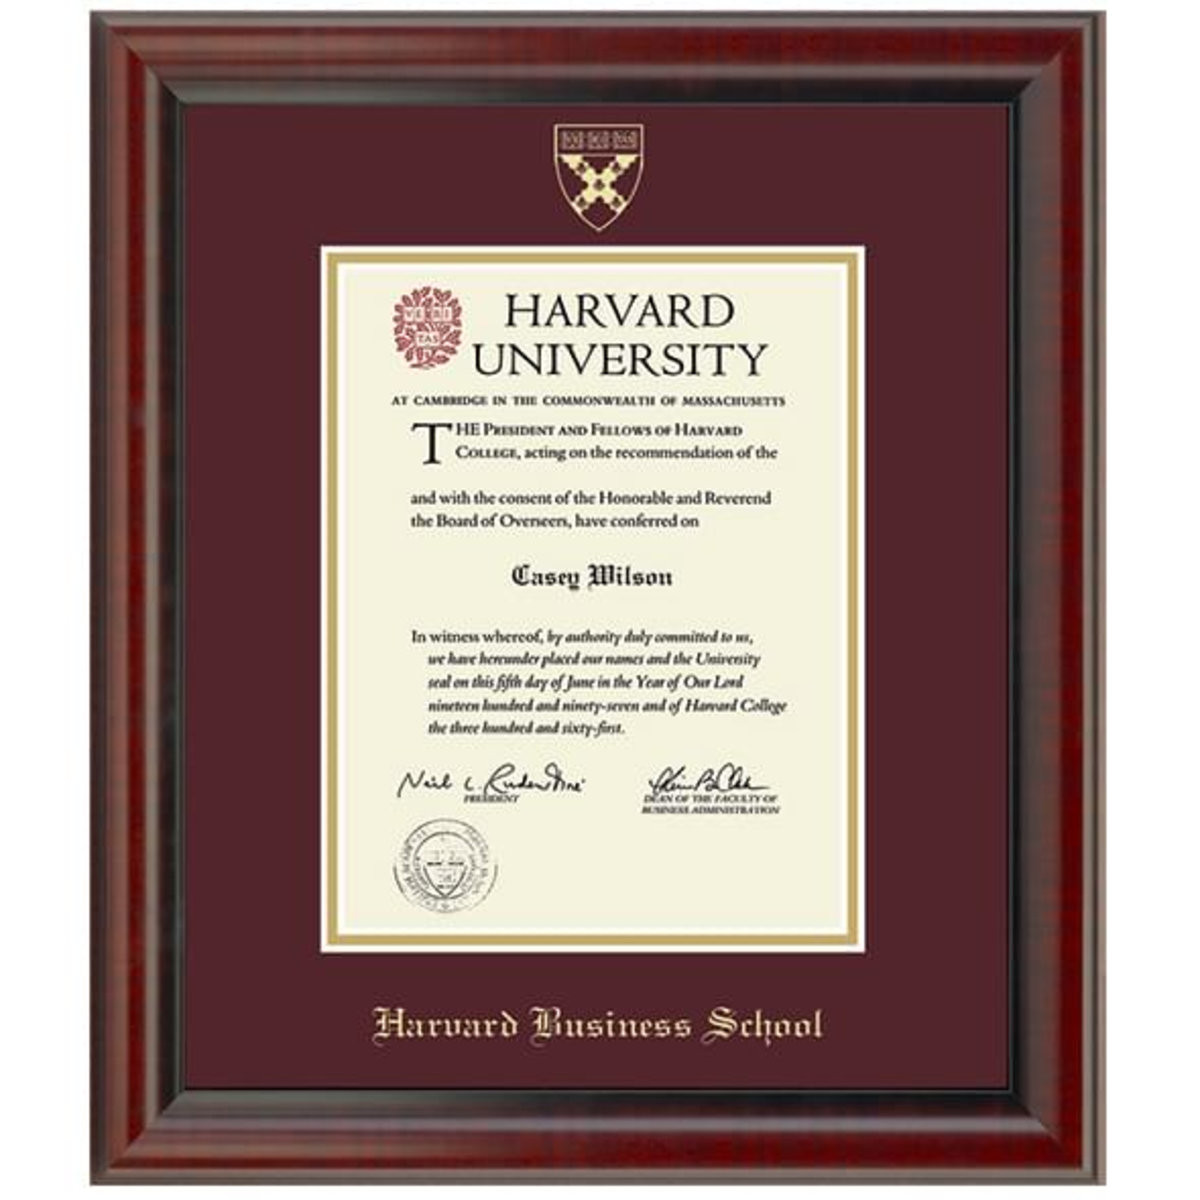 Mba Graduation Gift Ideas
 ficial Harvard Business School Diploma Frame the